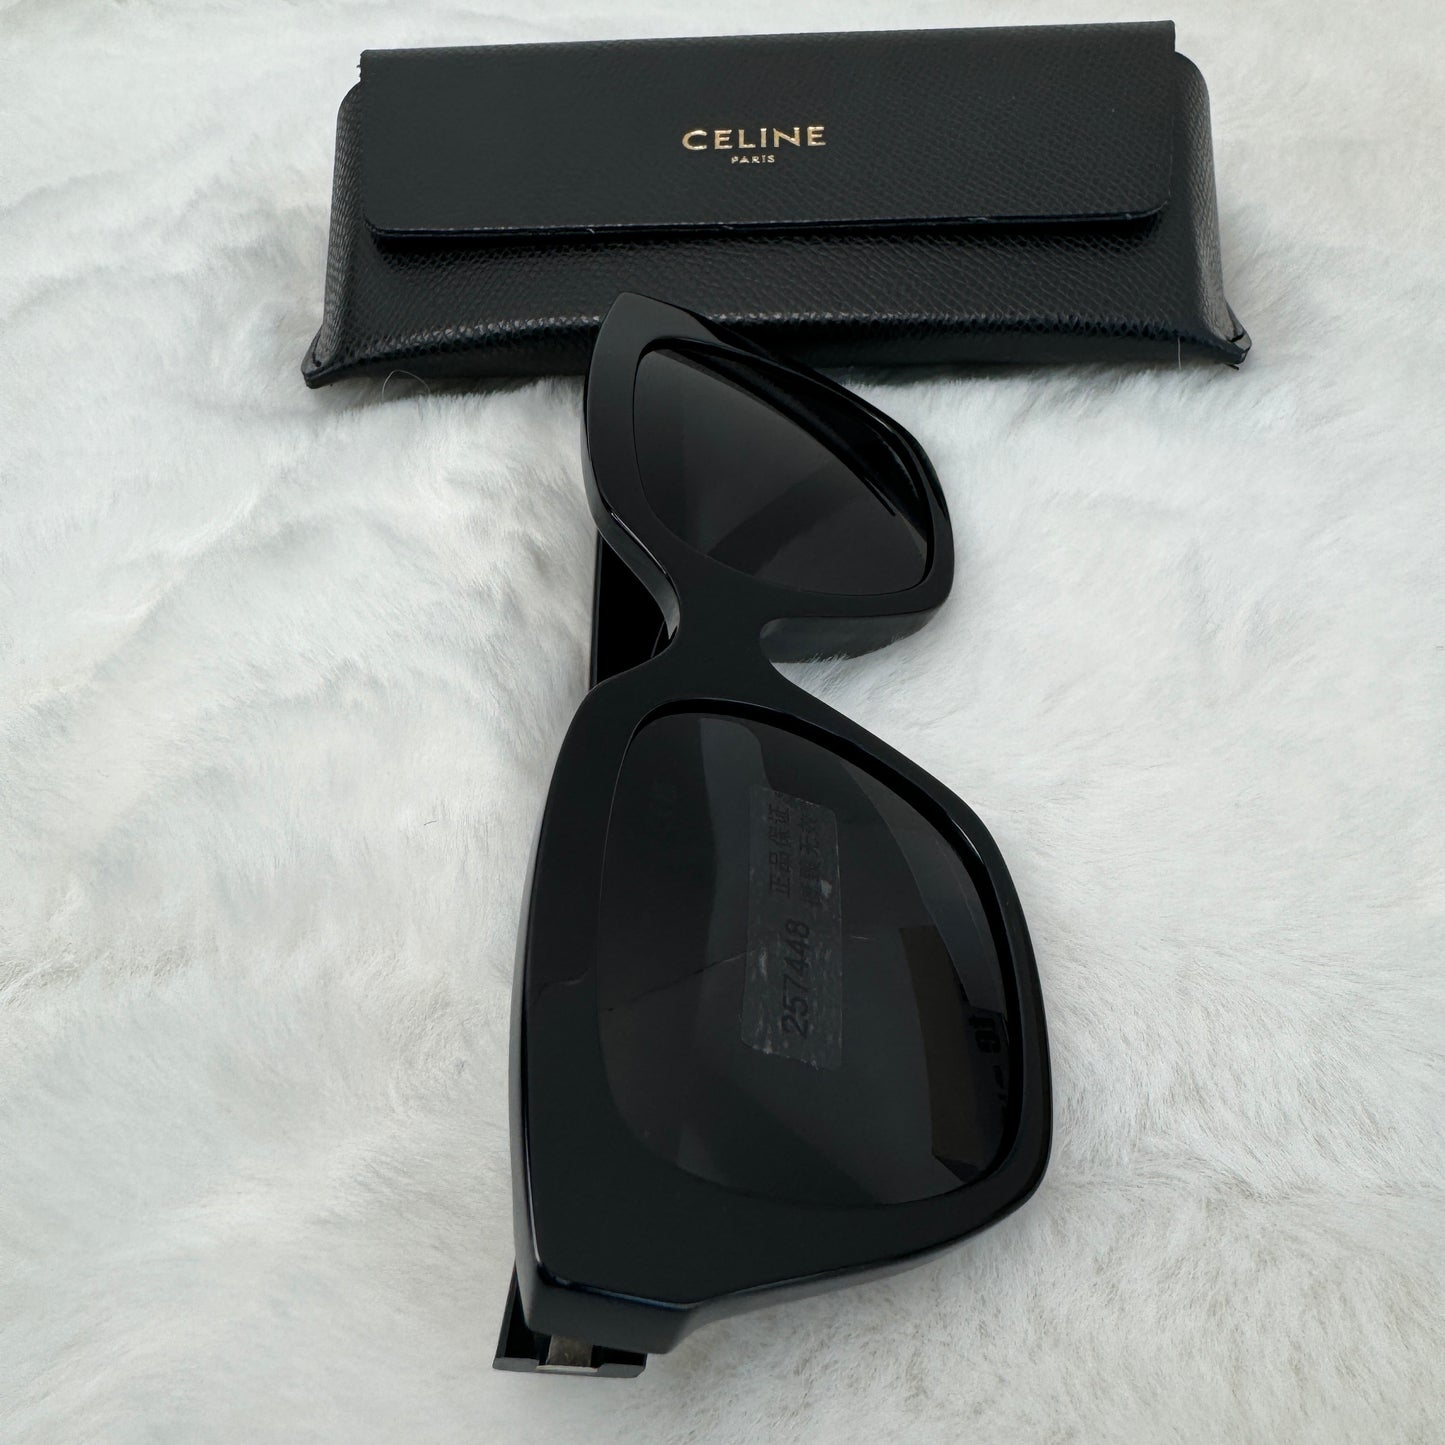 【Deal】Pre-owned Celine CL40198F 01A Black Sunglasses -HZ